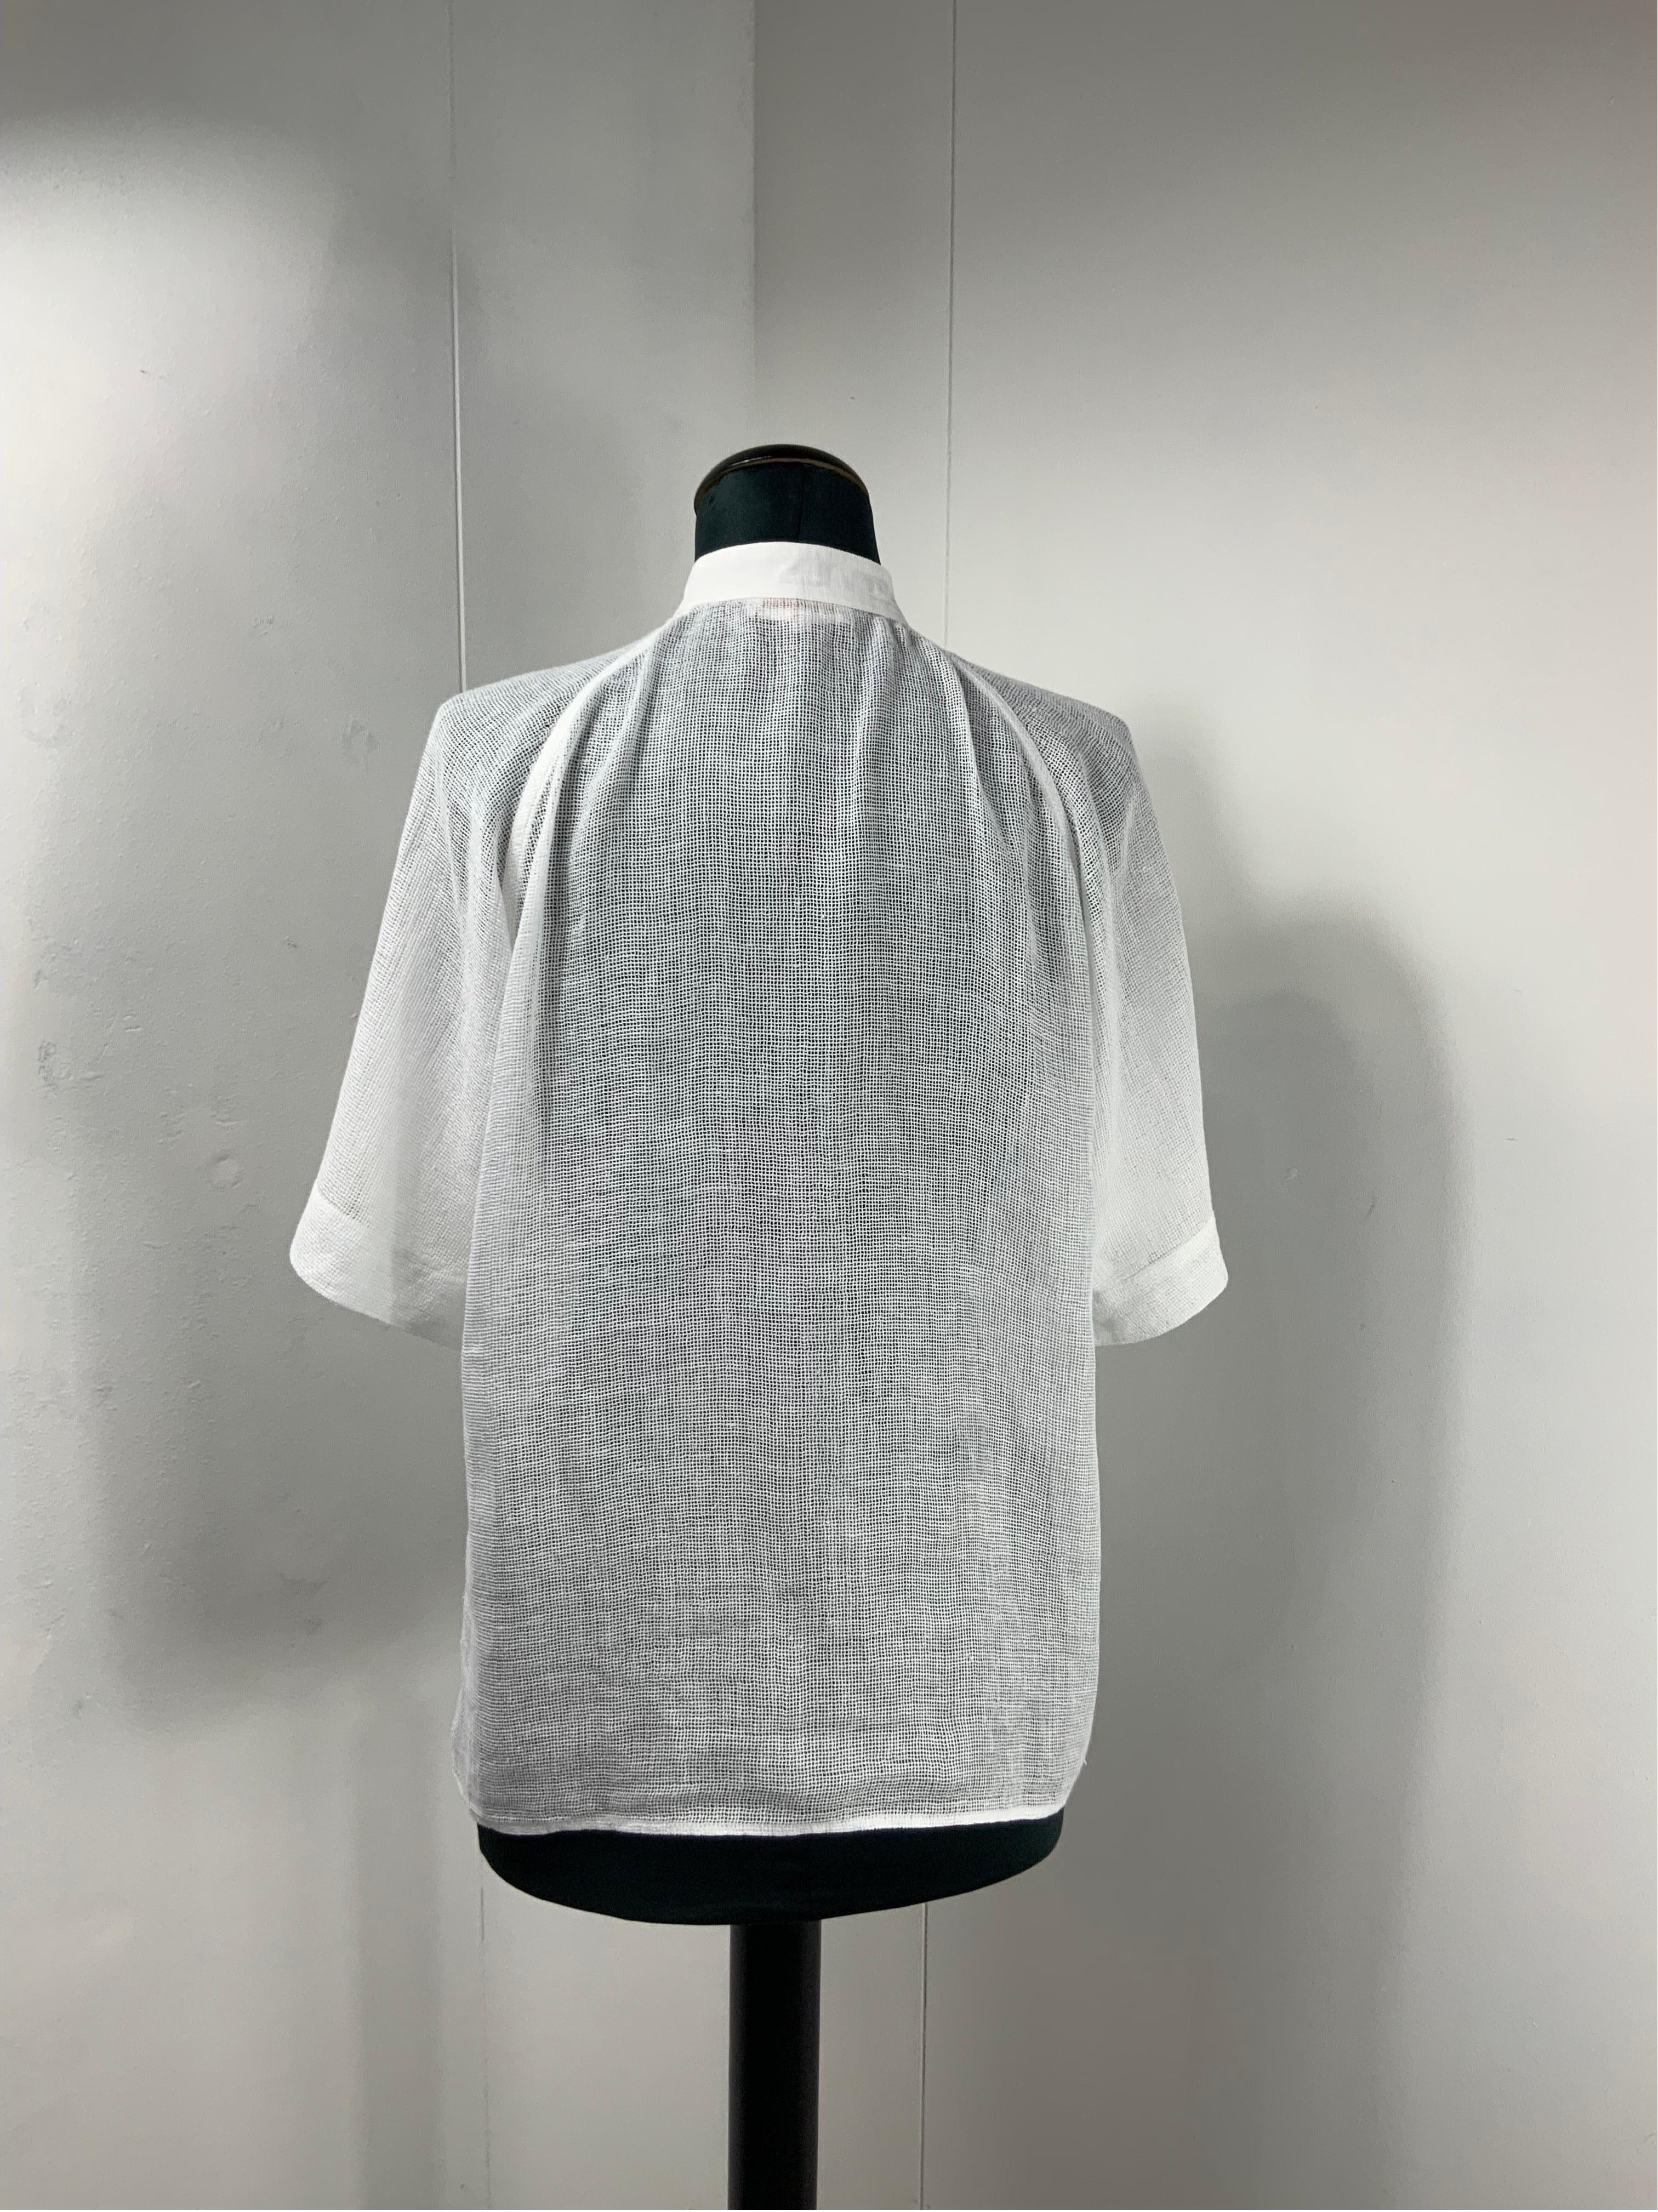 Yves Saint Laurent Vintage Shirt 3